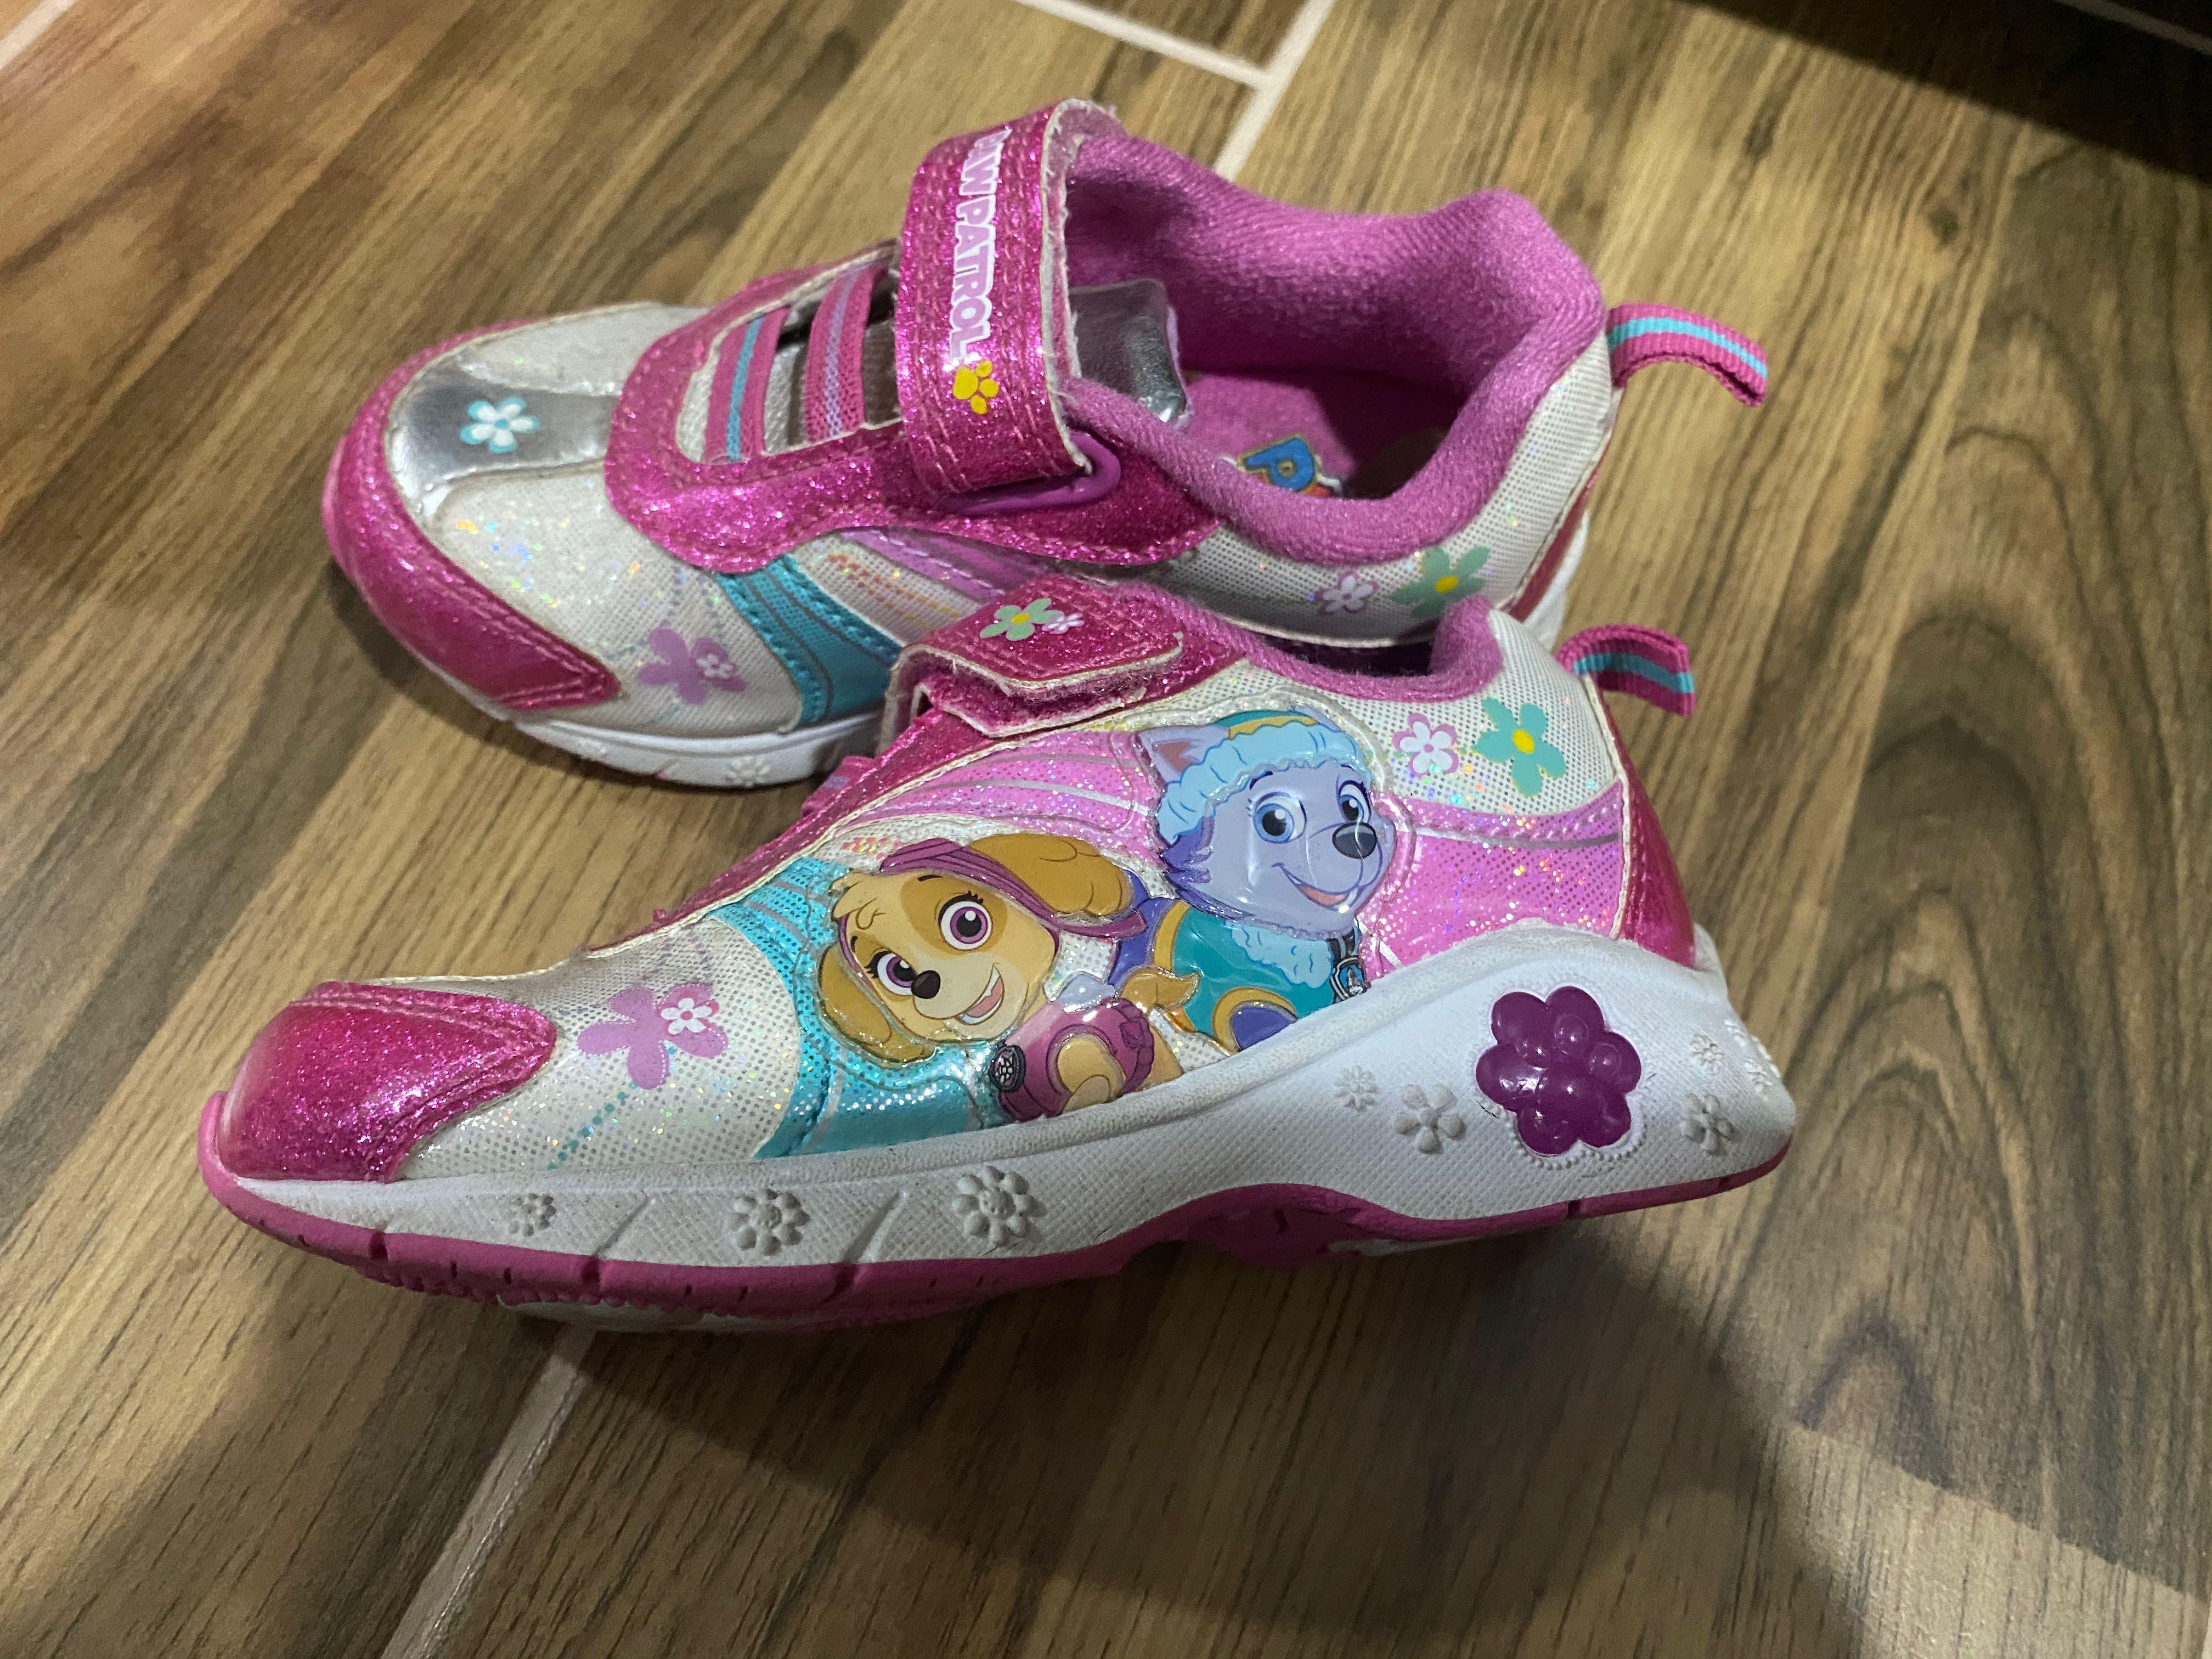 Nickelodeon paw patrol shoes, Babies 